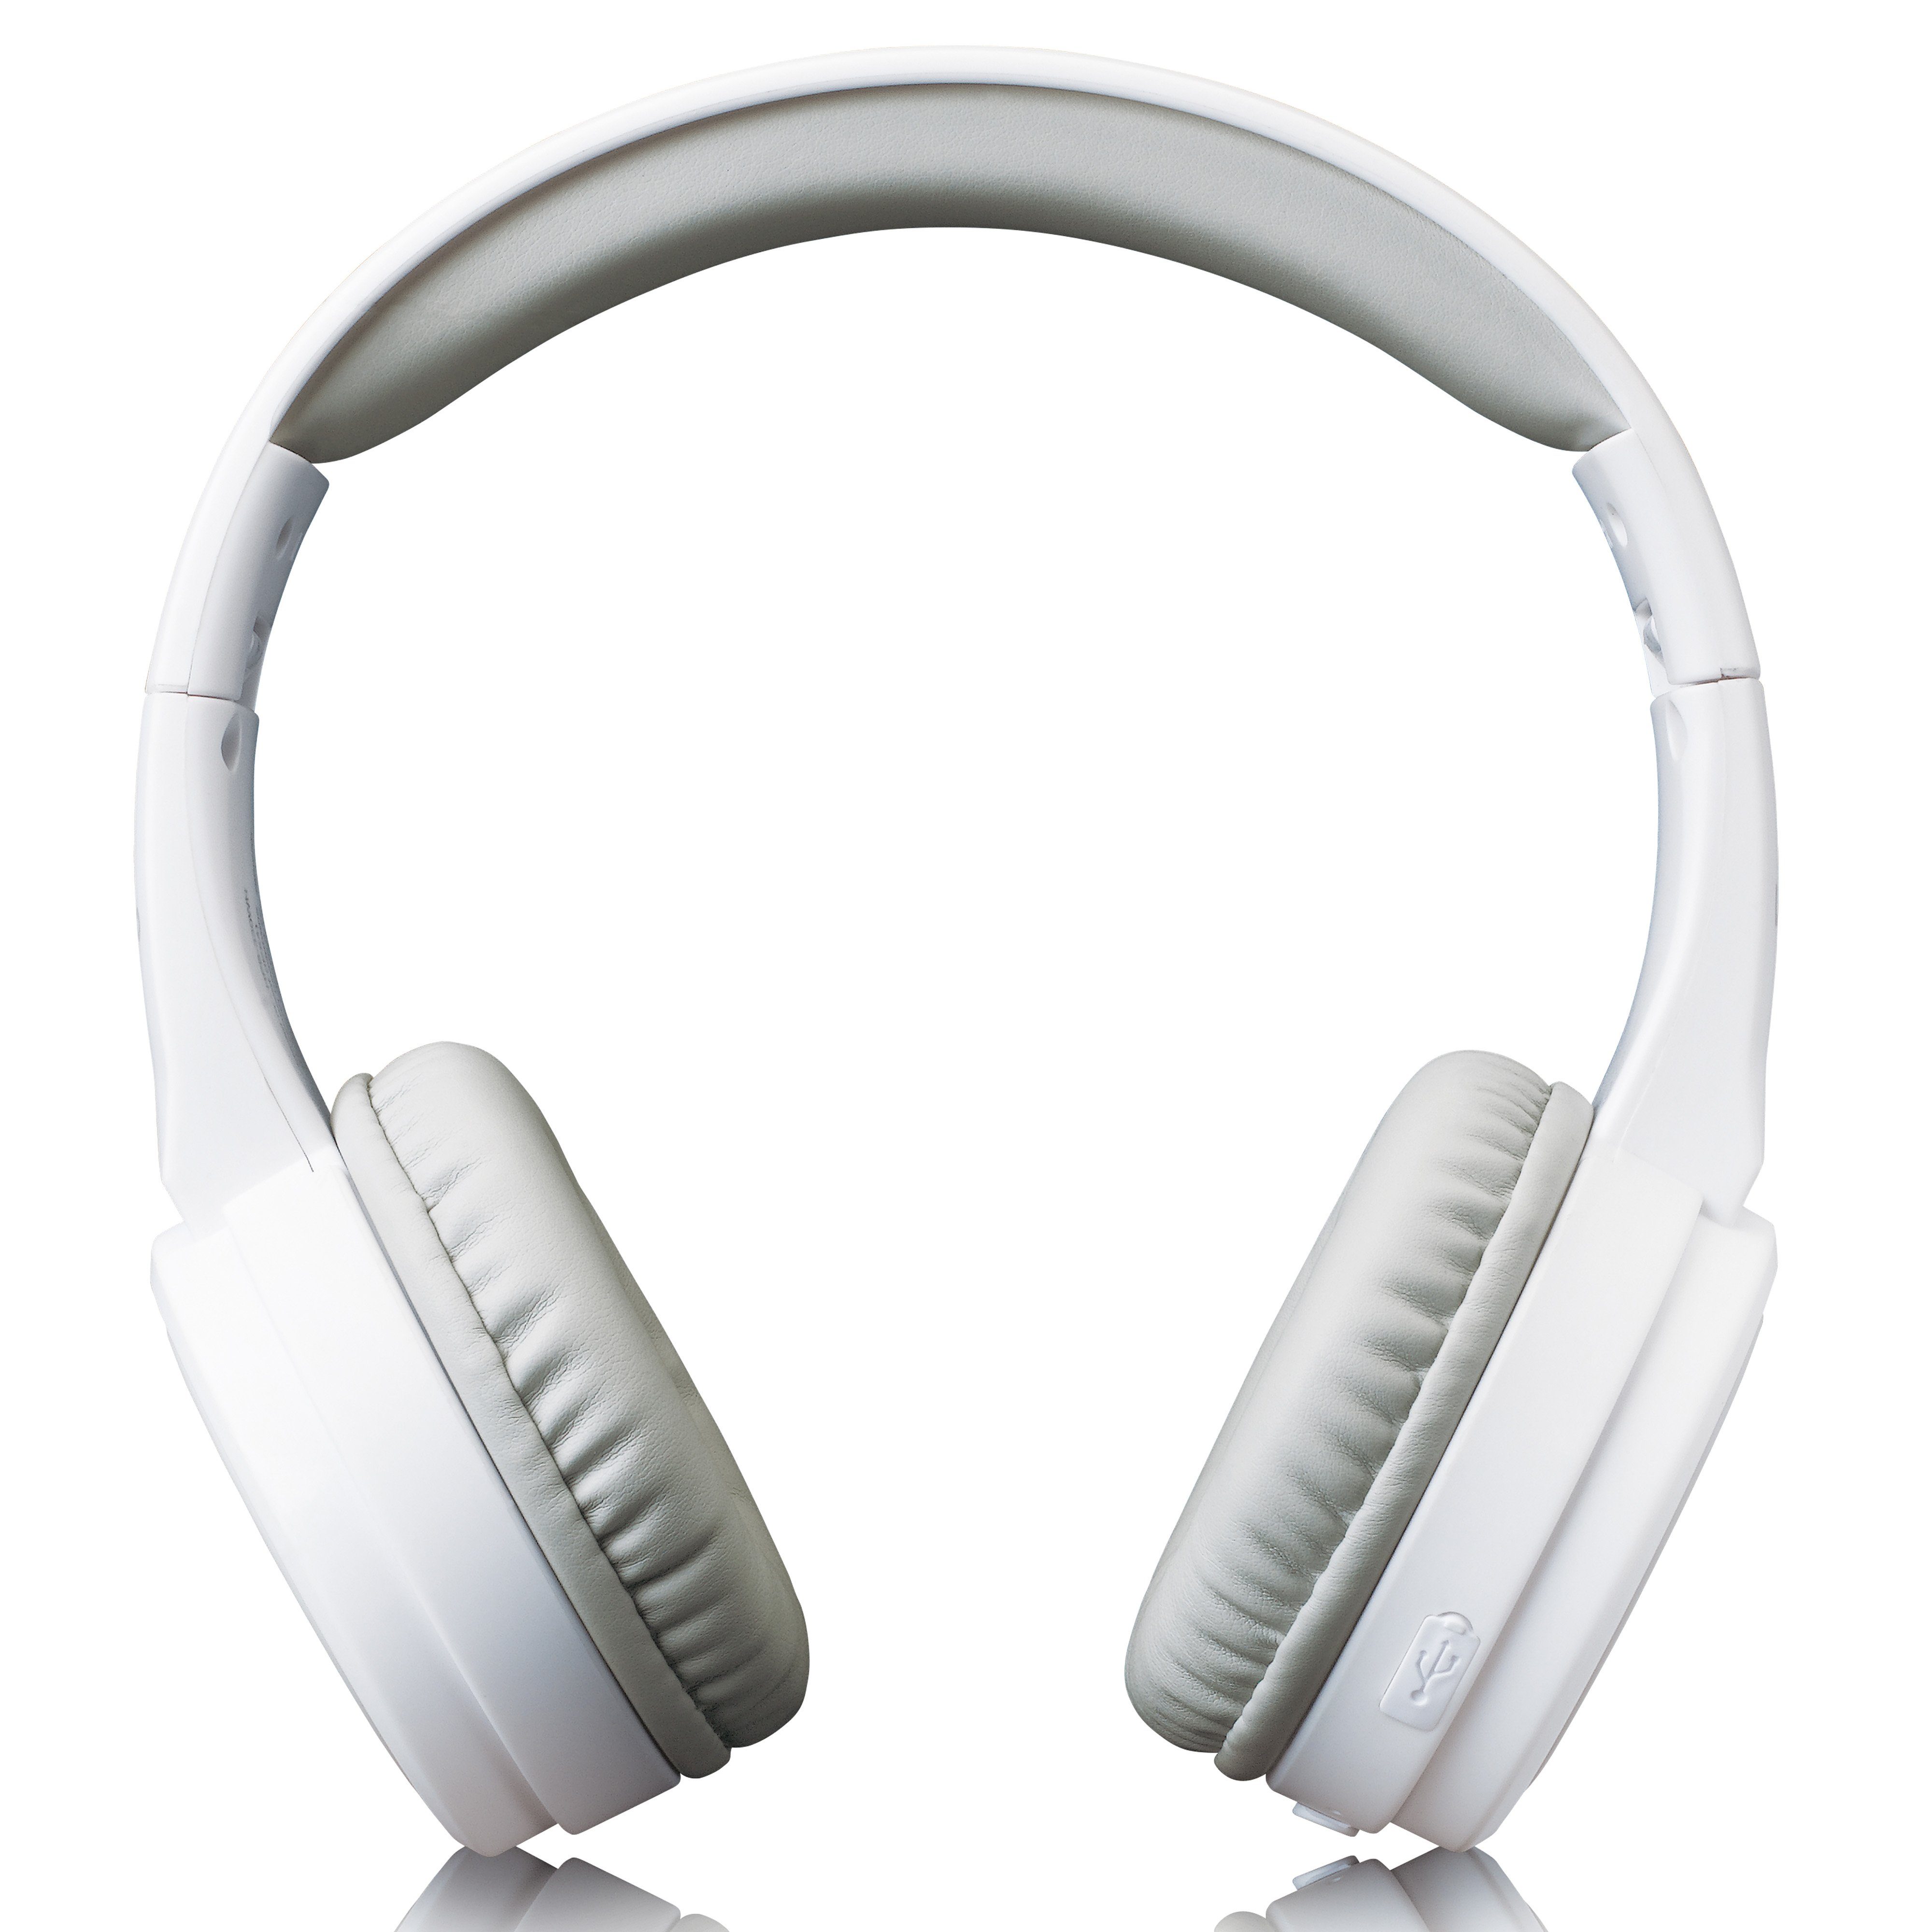 Audiokabel normaler 750mAh), Bluetooth-Kopfhörer Mit Lenco HPB-330WH Akku benutzbar als Kopfhörer (Integrierter